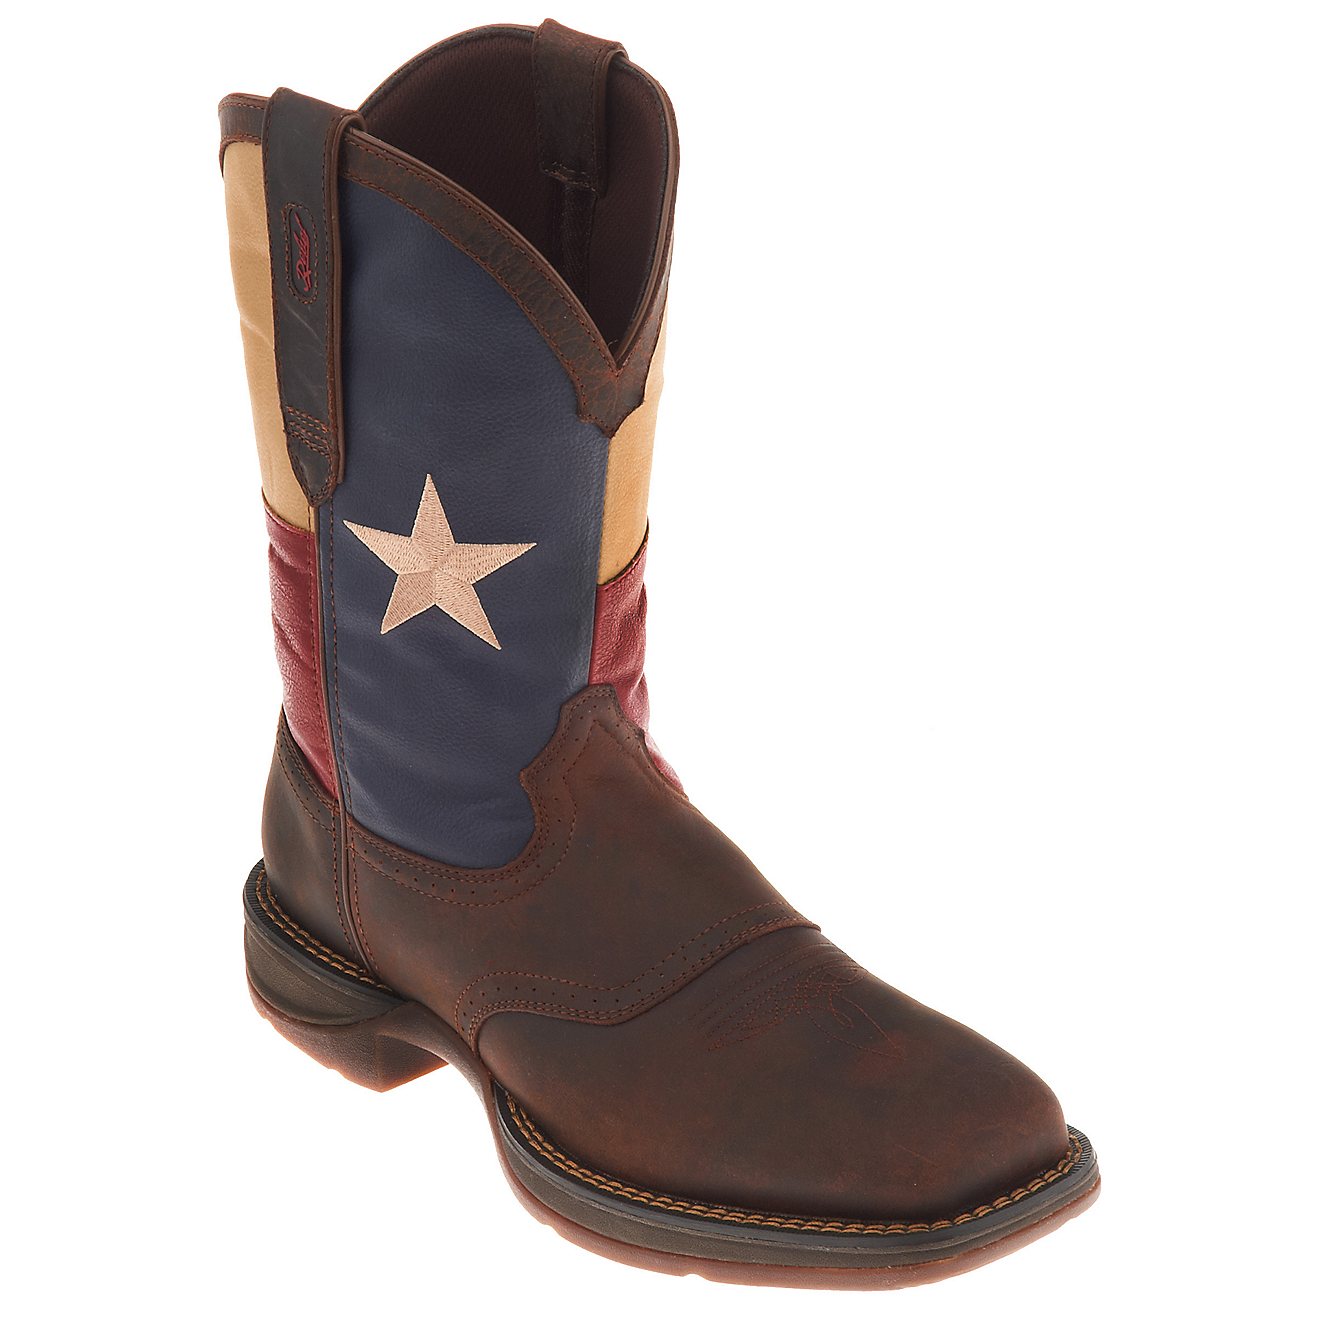 Durango Men's Rebel Texas Flag Western Boots                                                                                     - view number 2